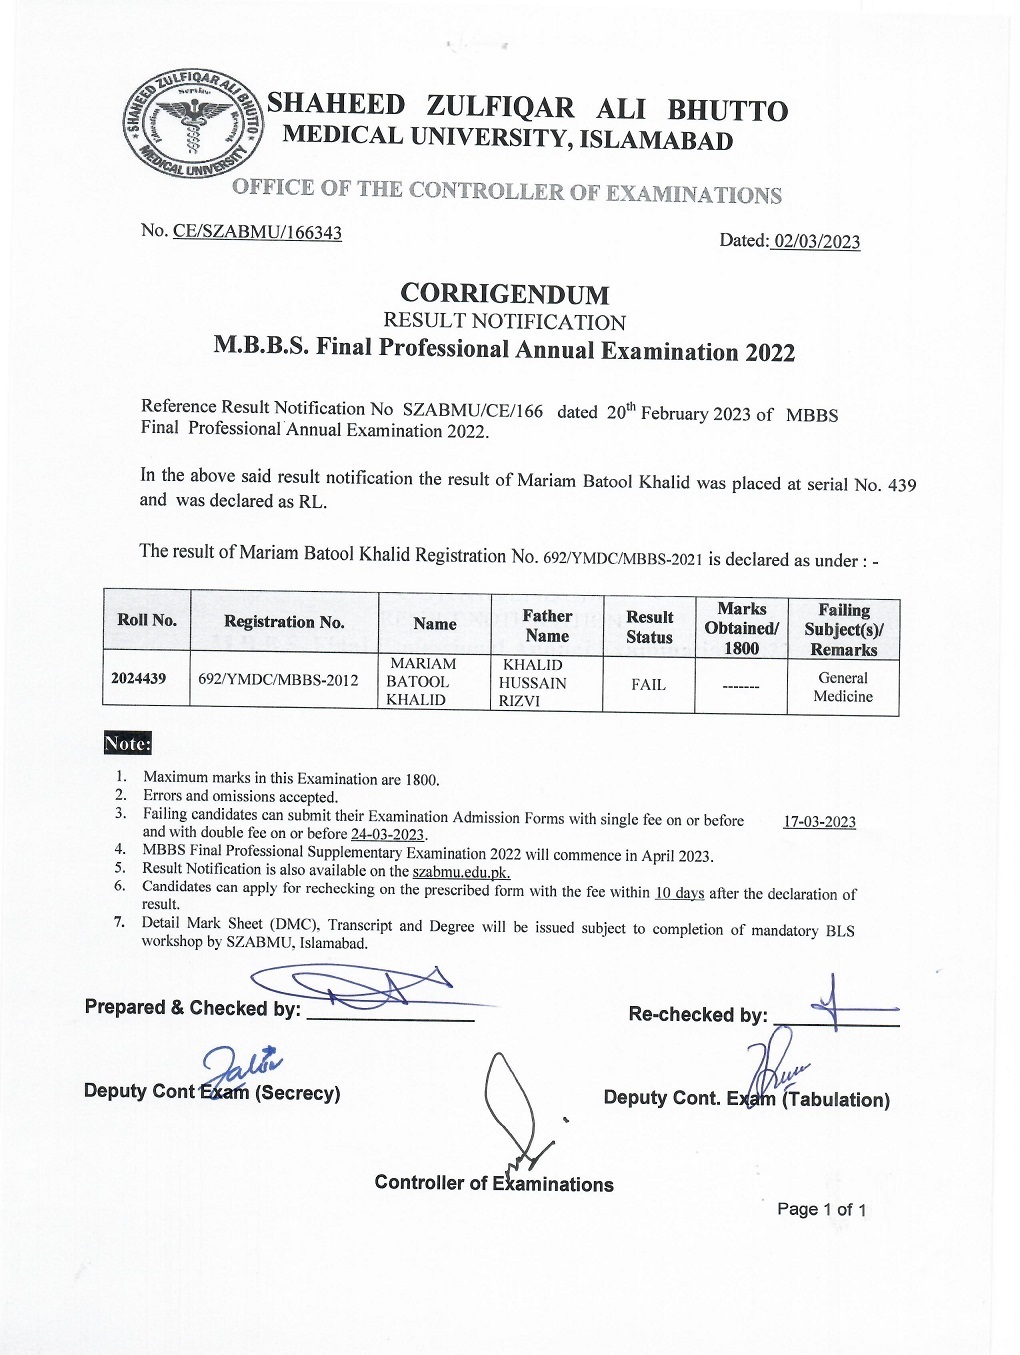 Corrigendum Result Notification - MBBS Final Professional Annual Examination 2022